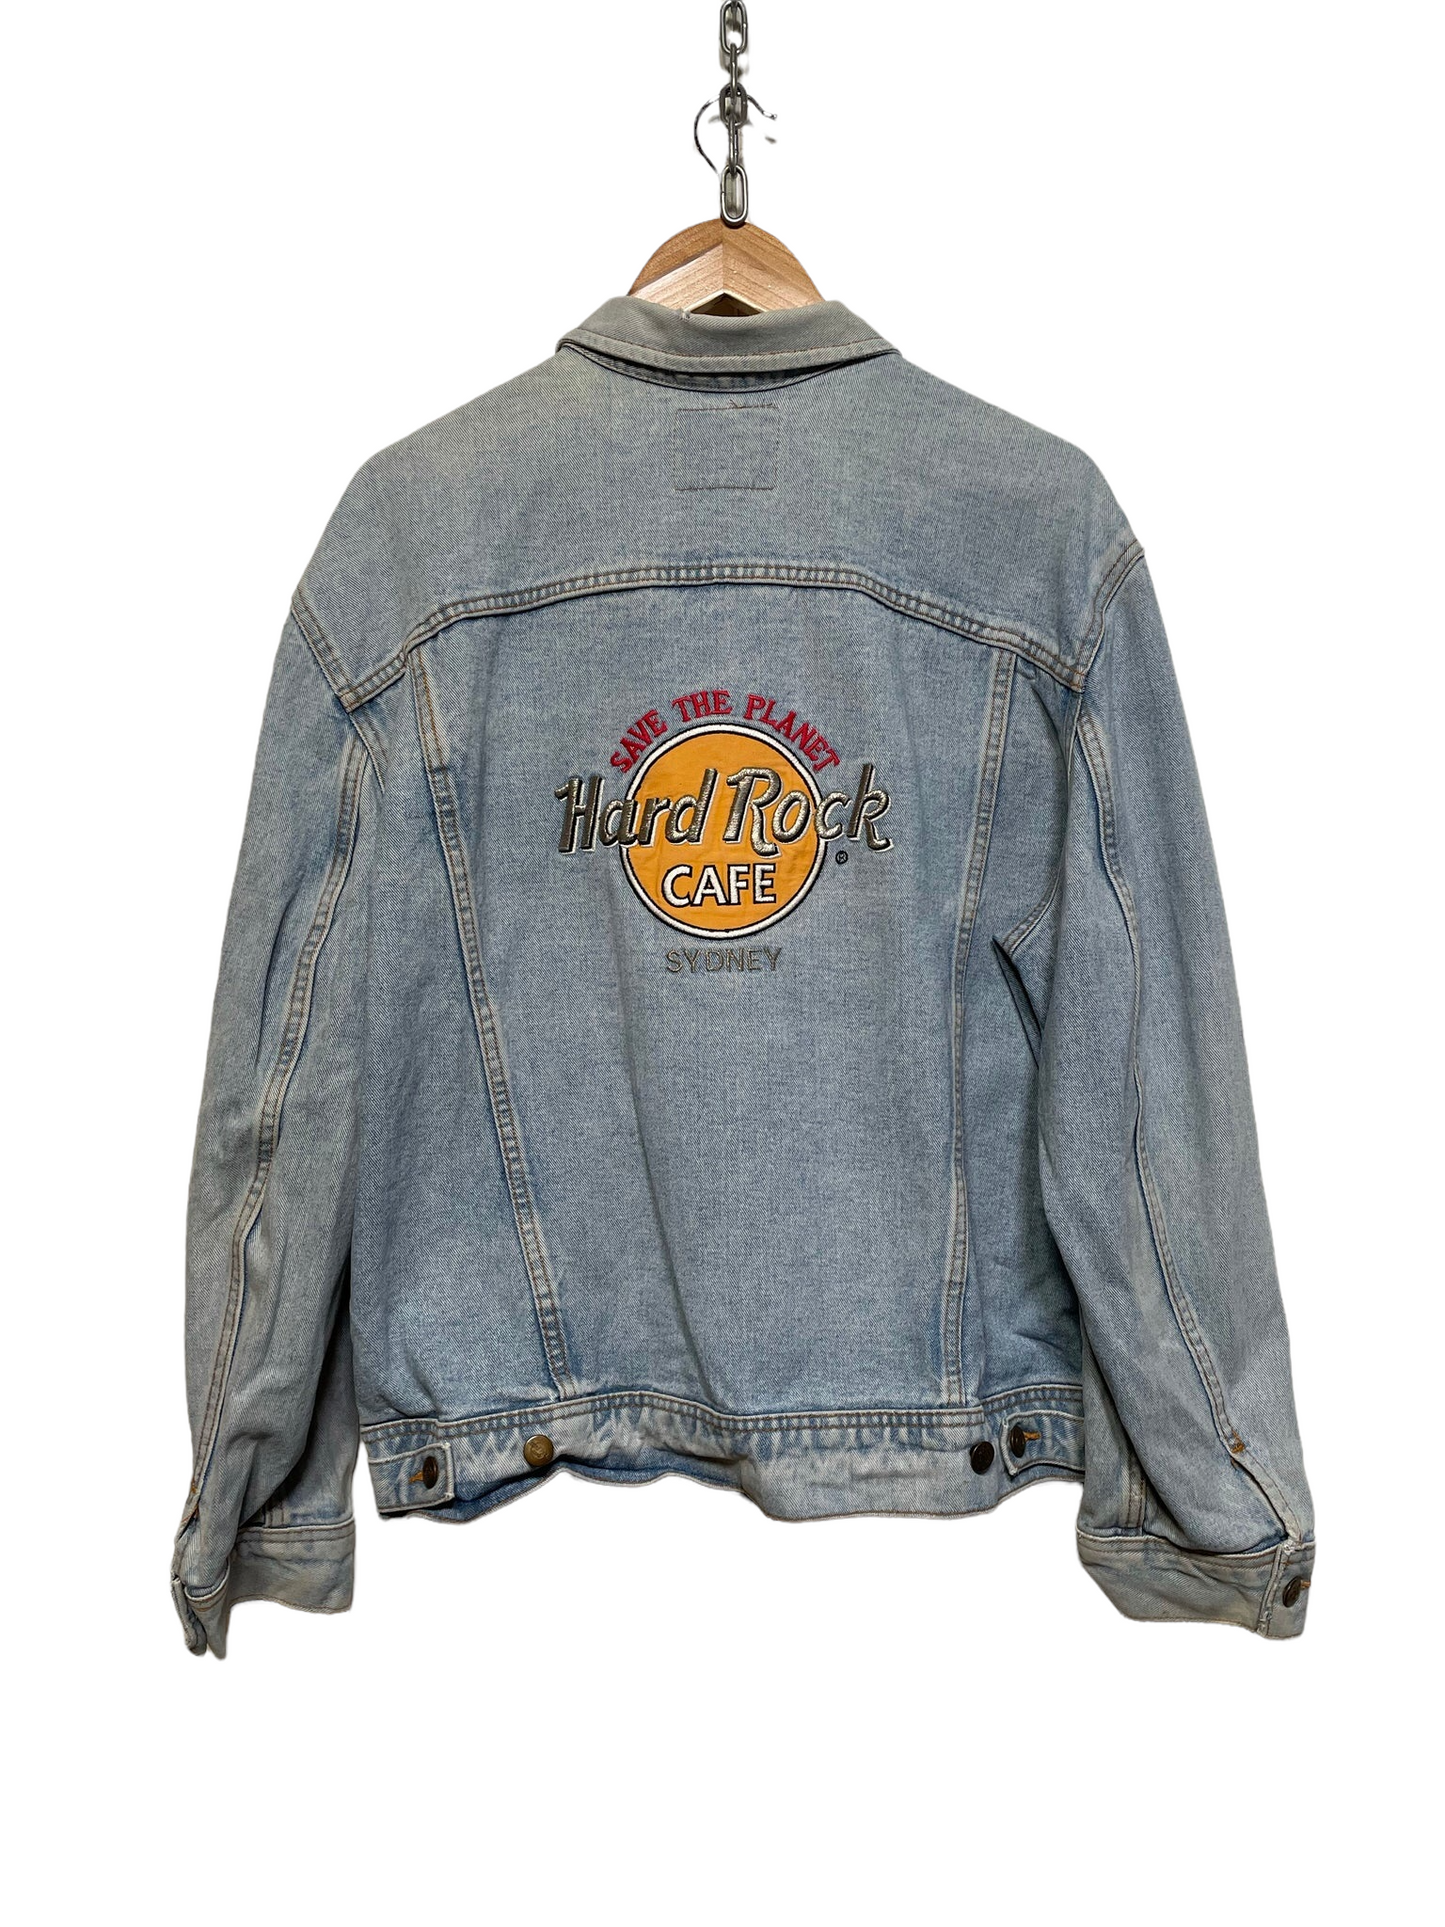 ‘Save The Planet’ Hard Rock Cafe Sydney Denim Jacket (Size XL)